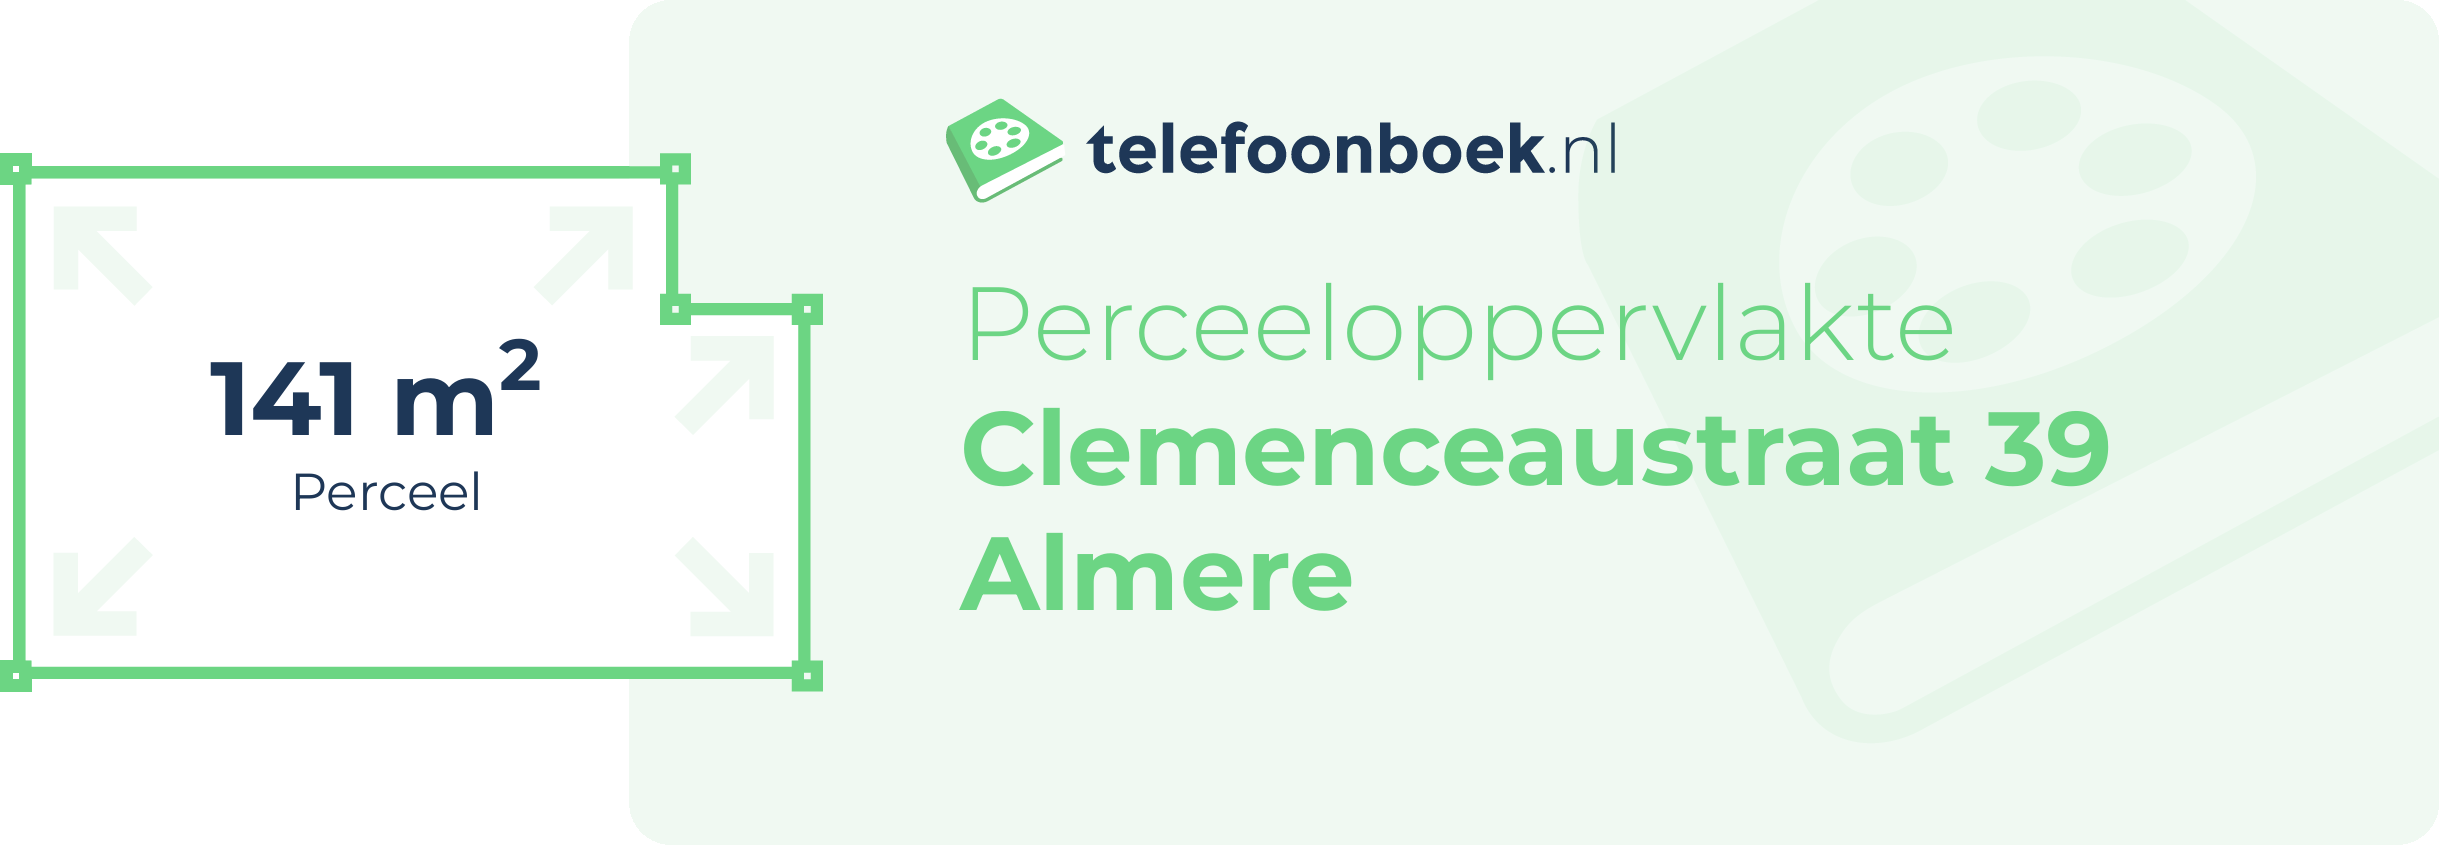 Perceeloppervlakte Clemenceaustraat 39 Almere